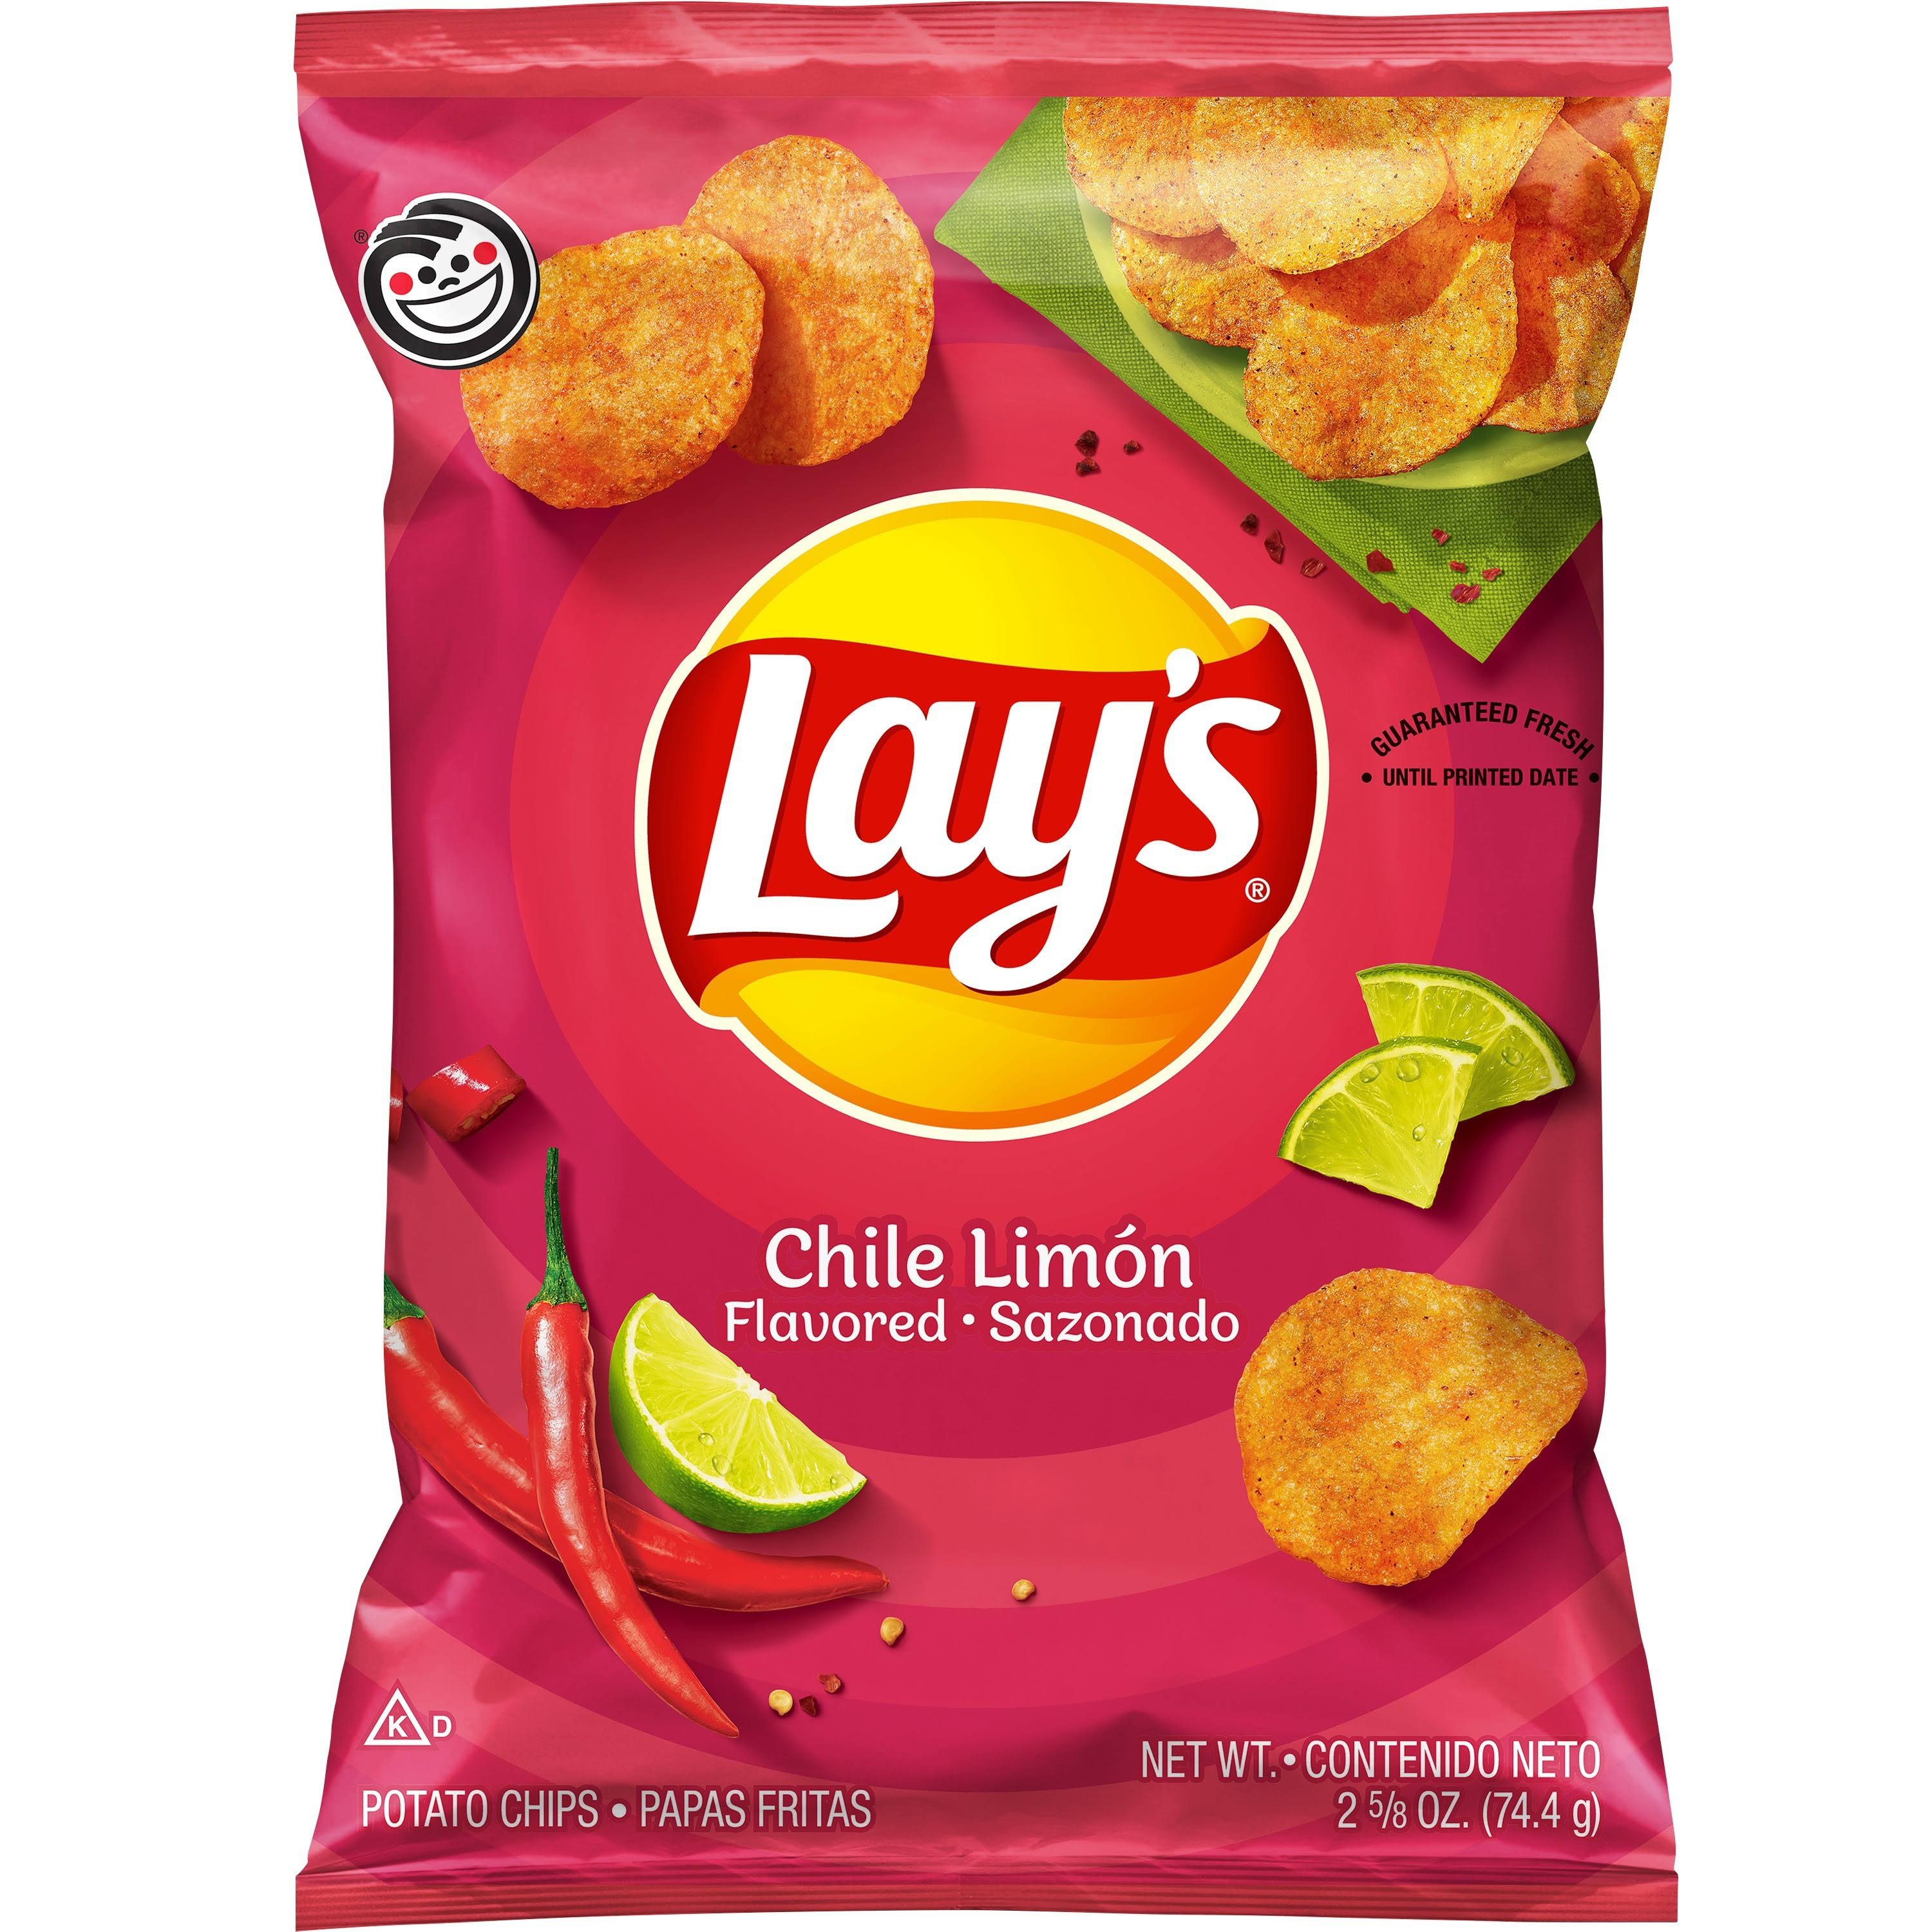 Lays Potato Chips, Chile Limon Flavored - 2.63 oz